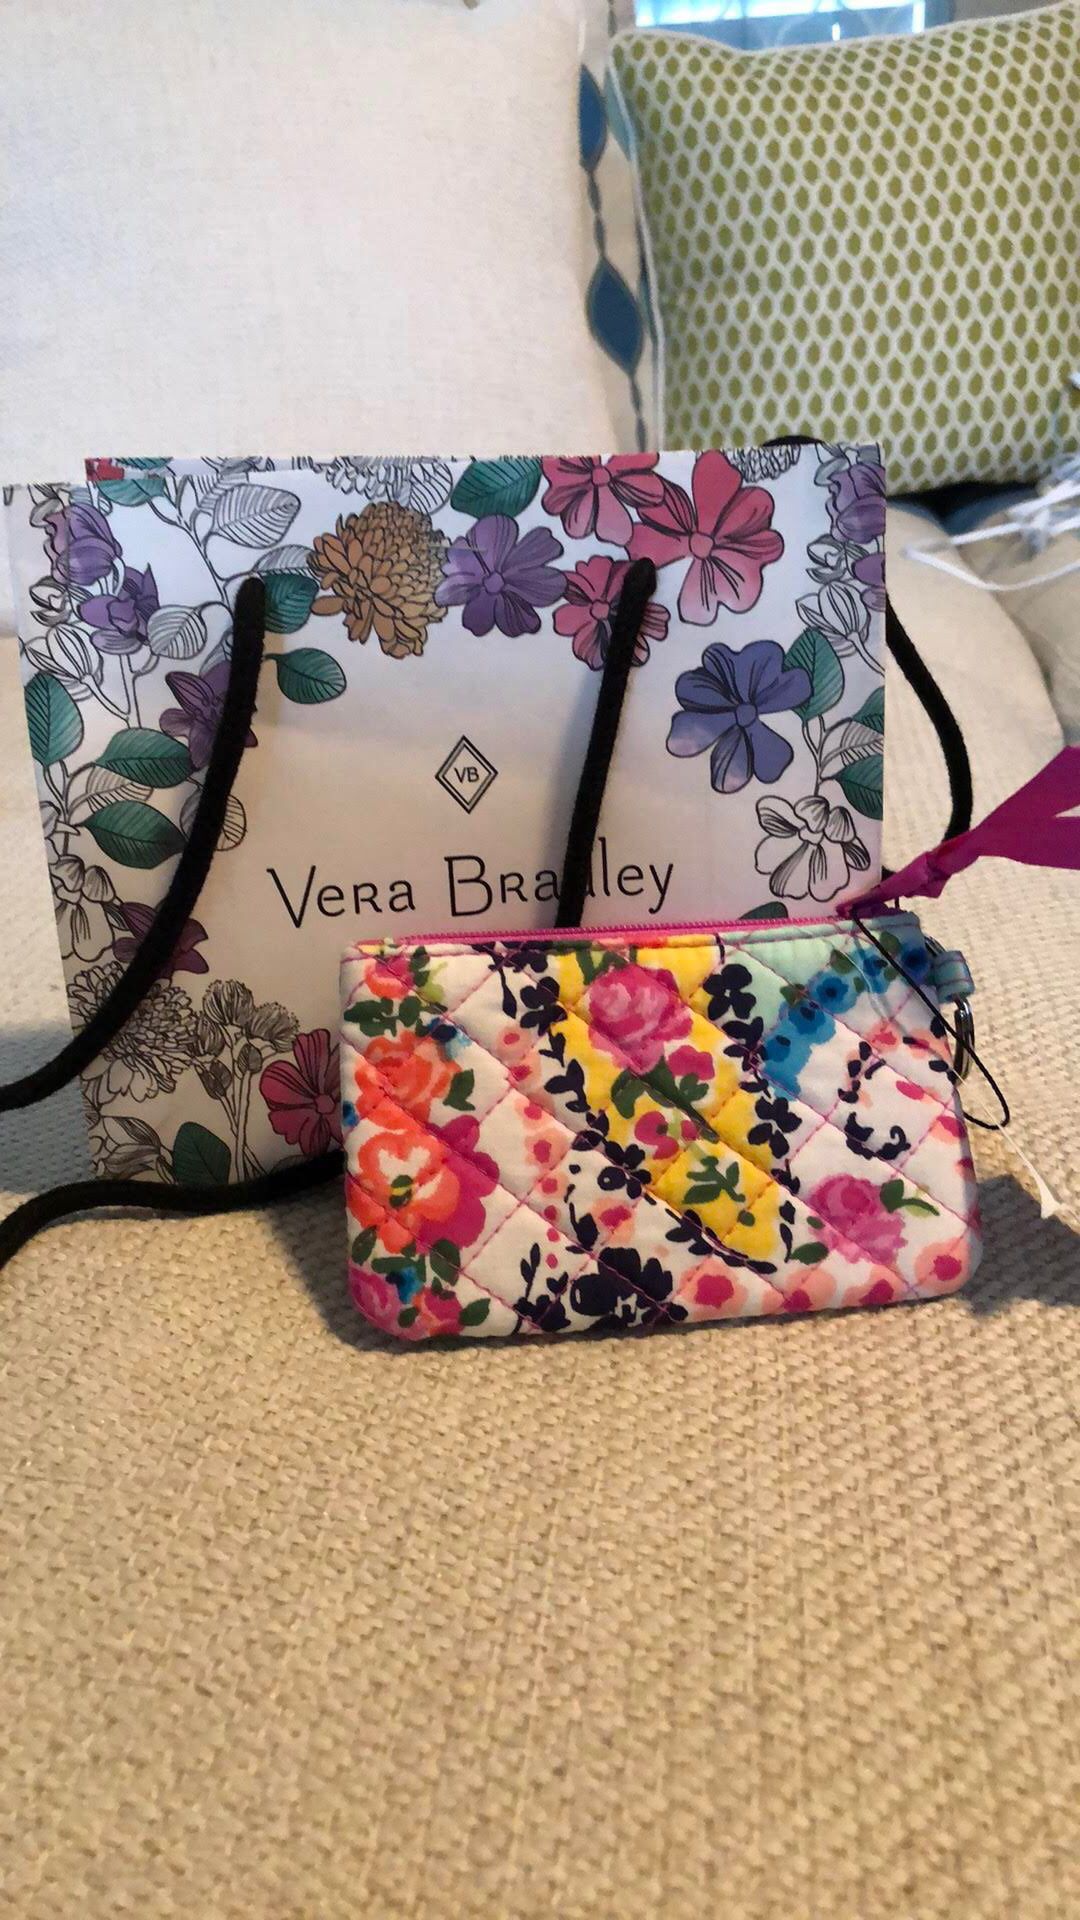 Vera Bradley id holder/change purse